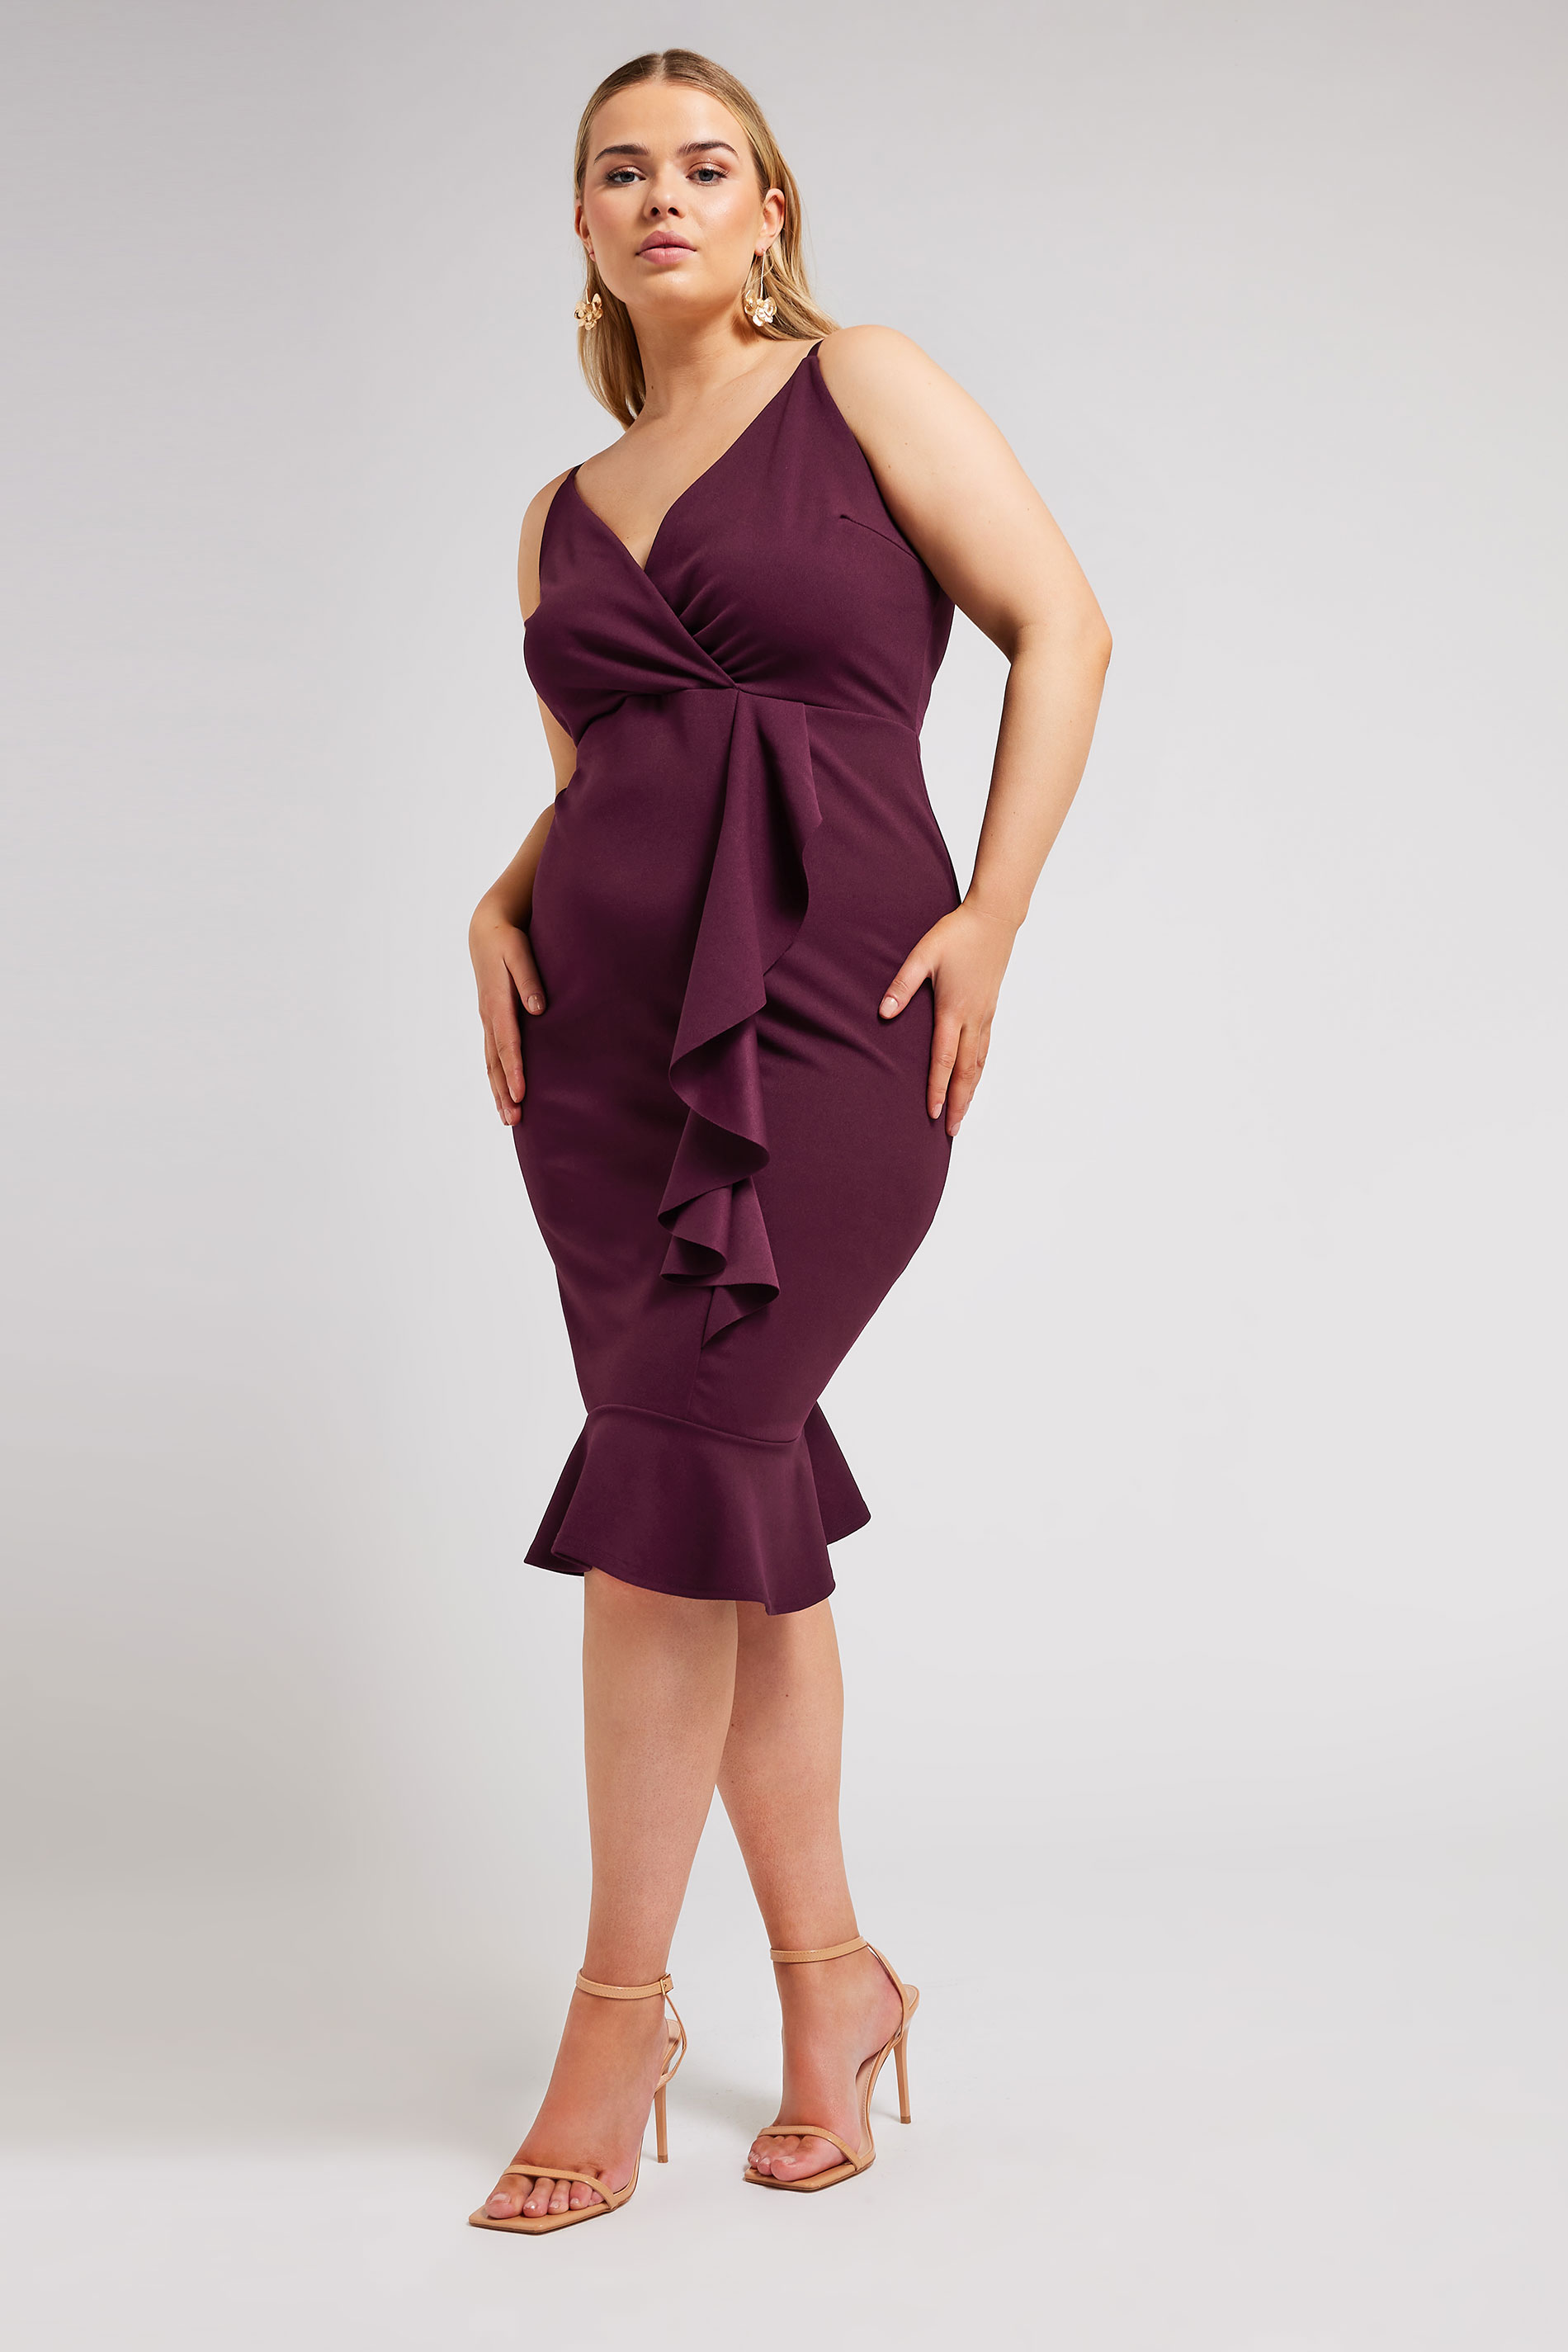 YOURS LONDON Plus Size Purple Ruffle Wrap Dress | Yours Clothing 2